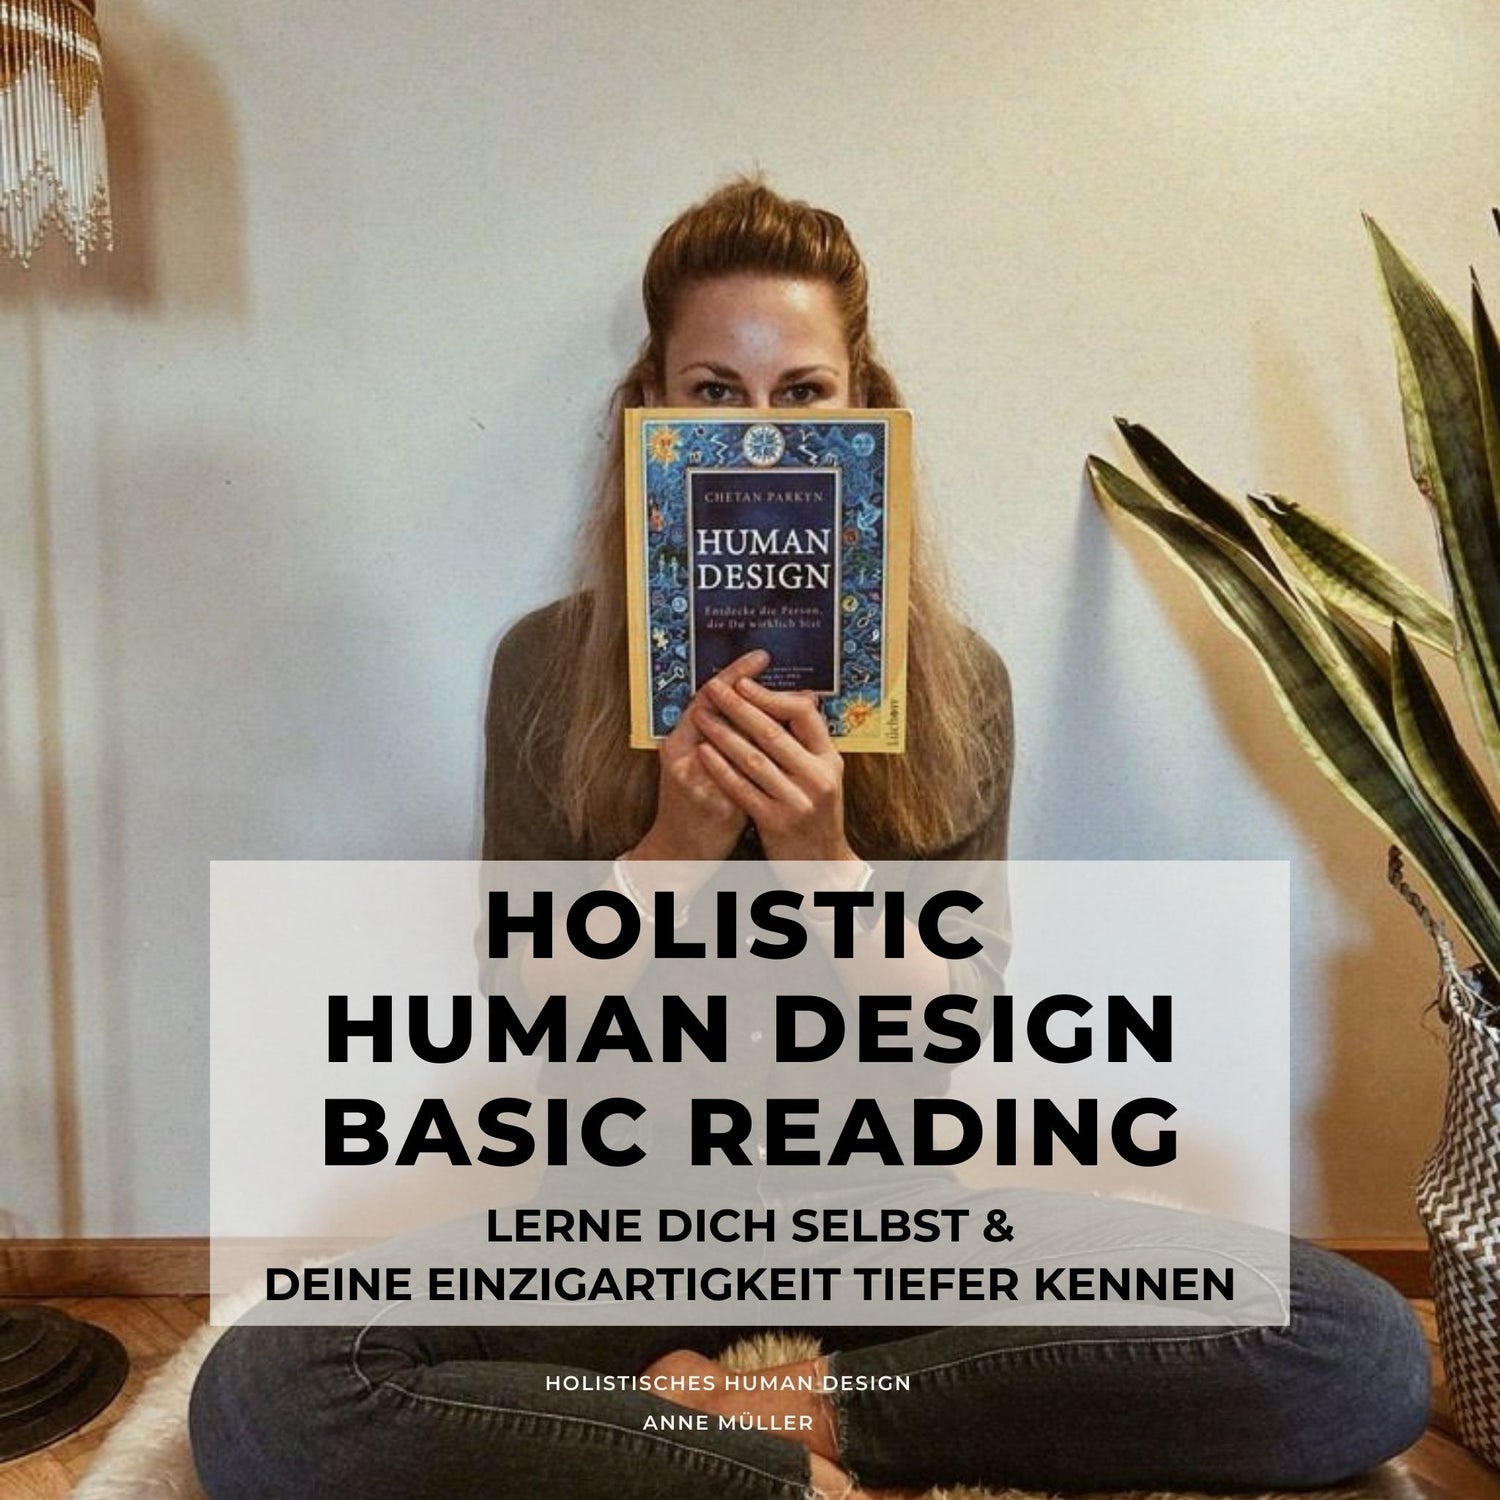 Human Design Basic Reading zur eigenen Bewusstwerdung kaufen im Human Design Shop